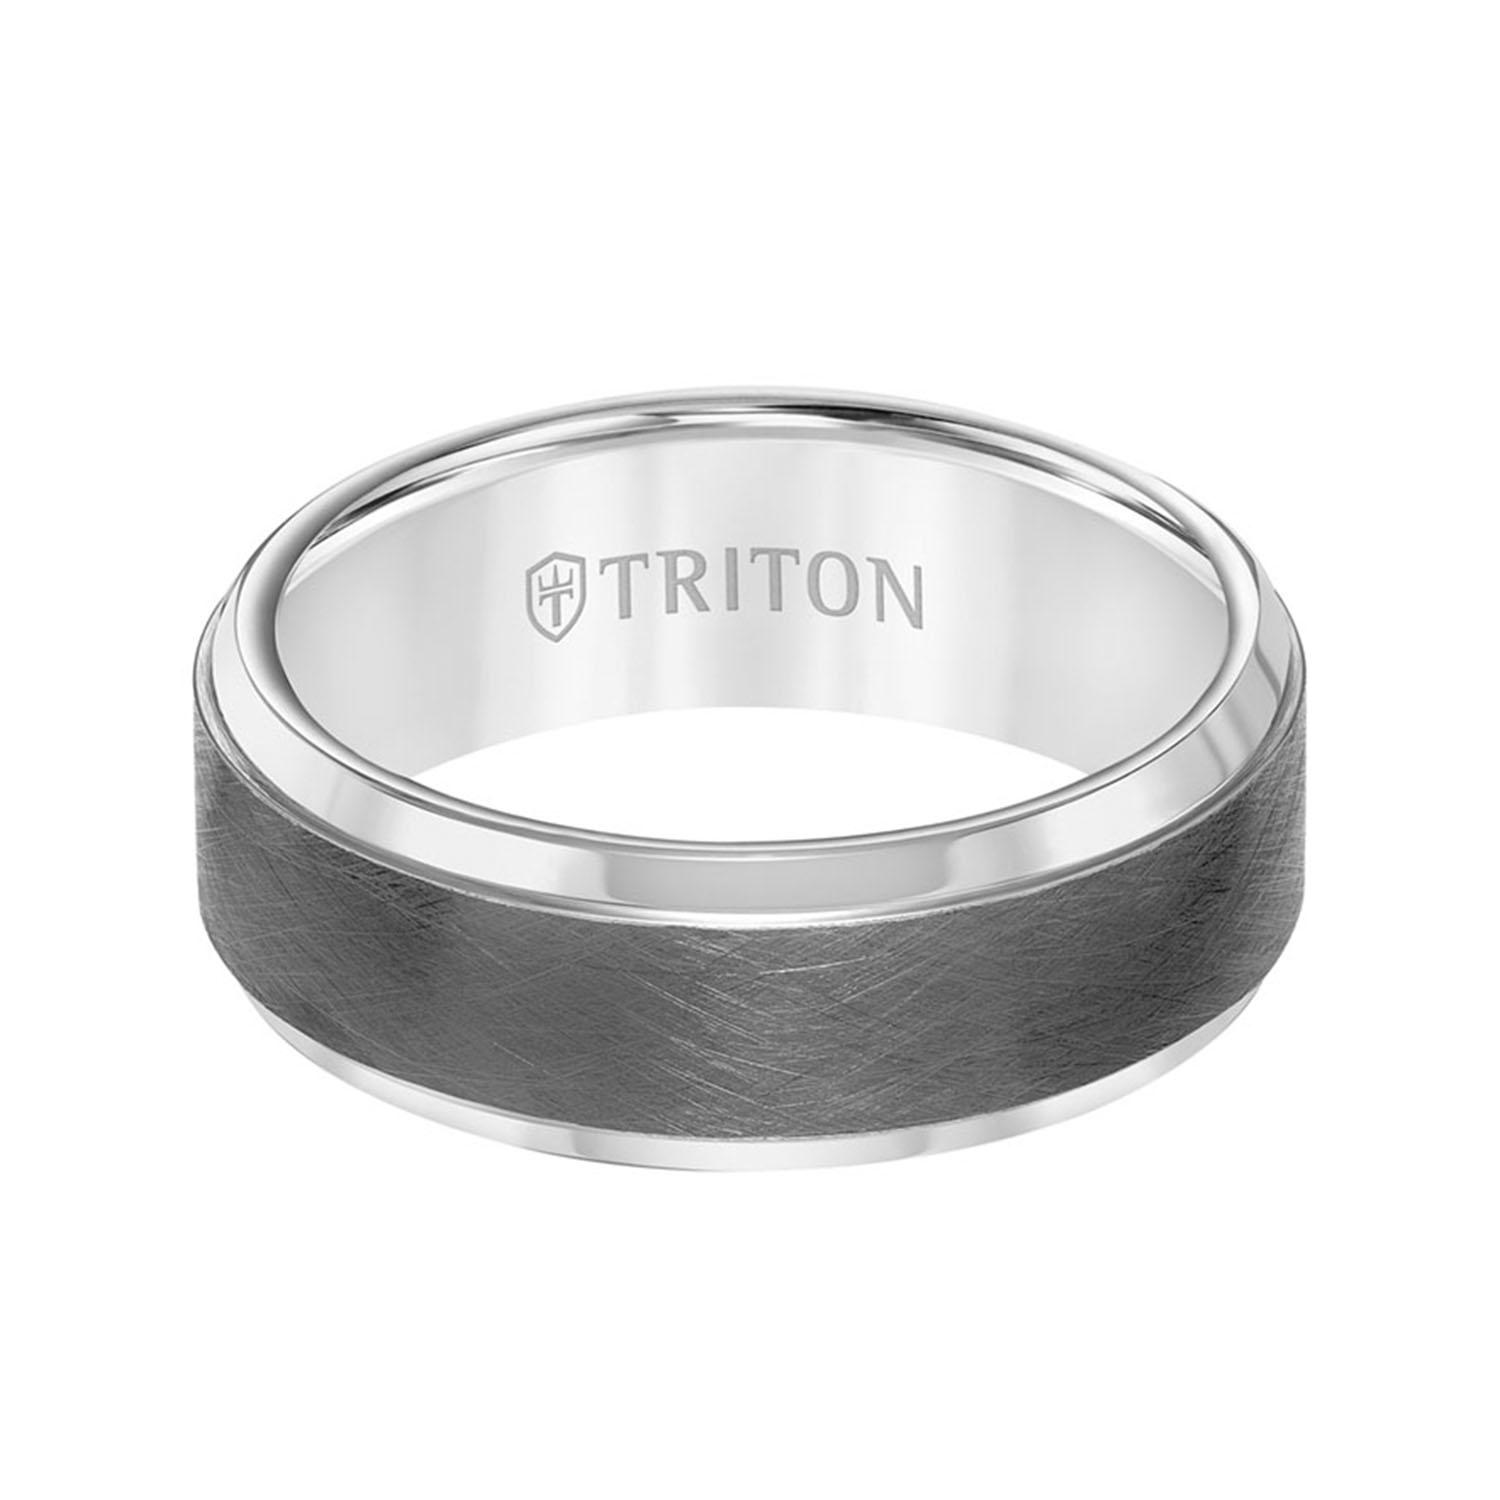 Triton Tungsten Band With Crystalline Finish